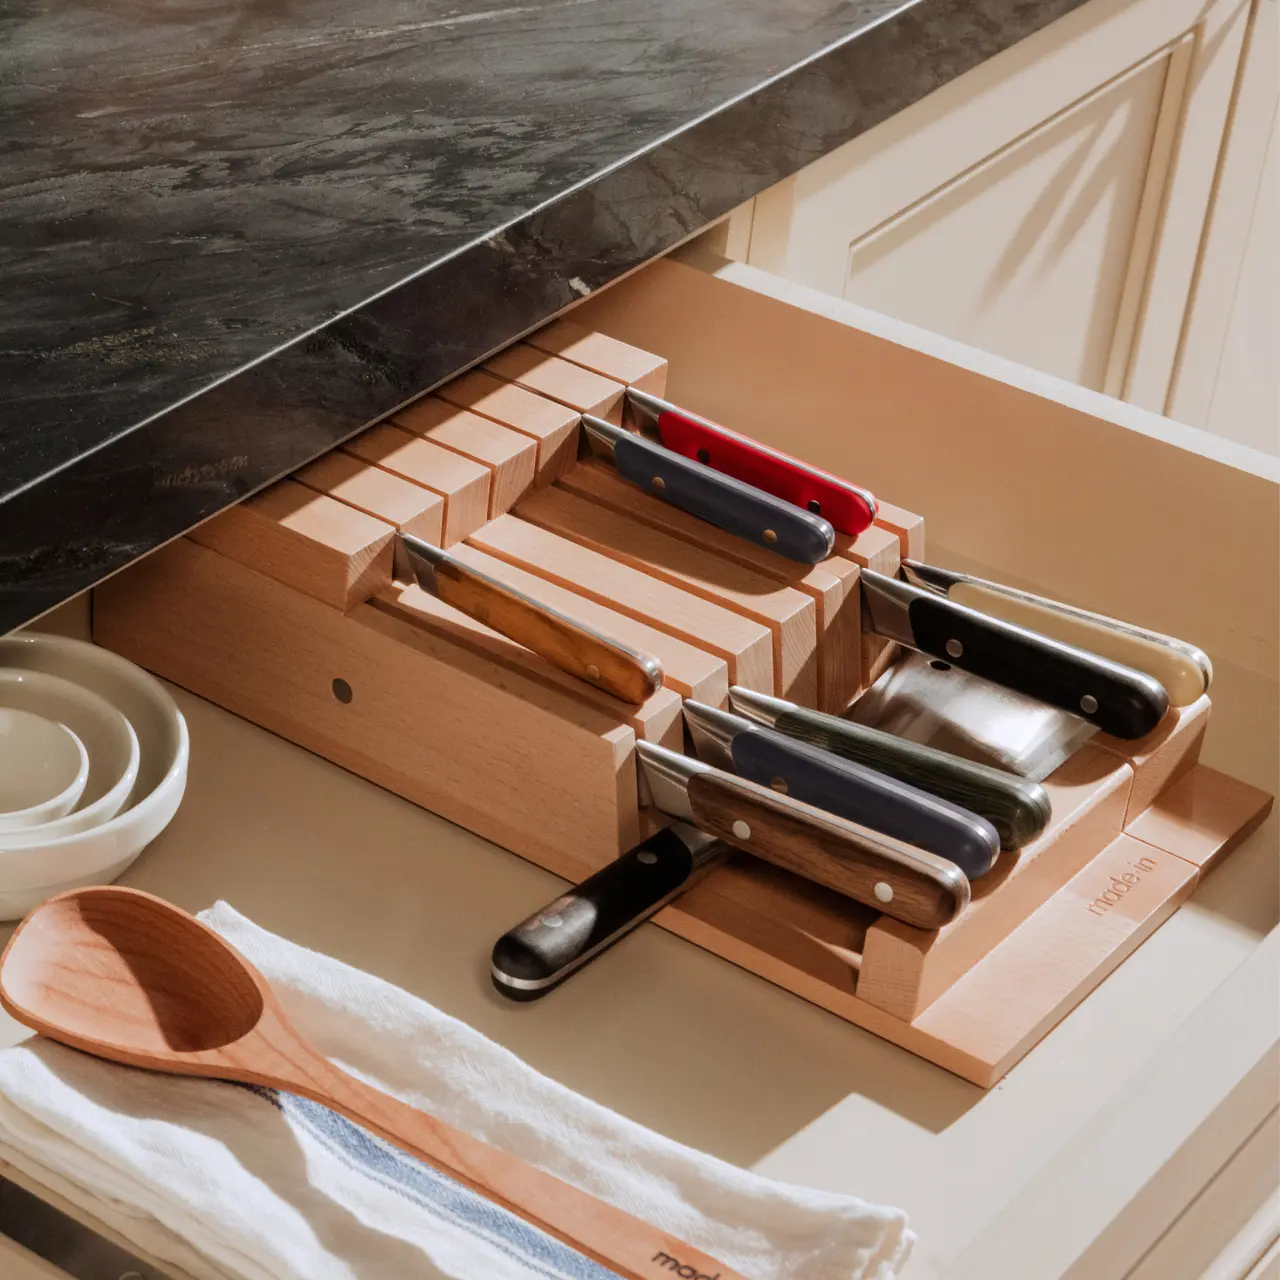 knife organizer in drawer